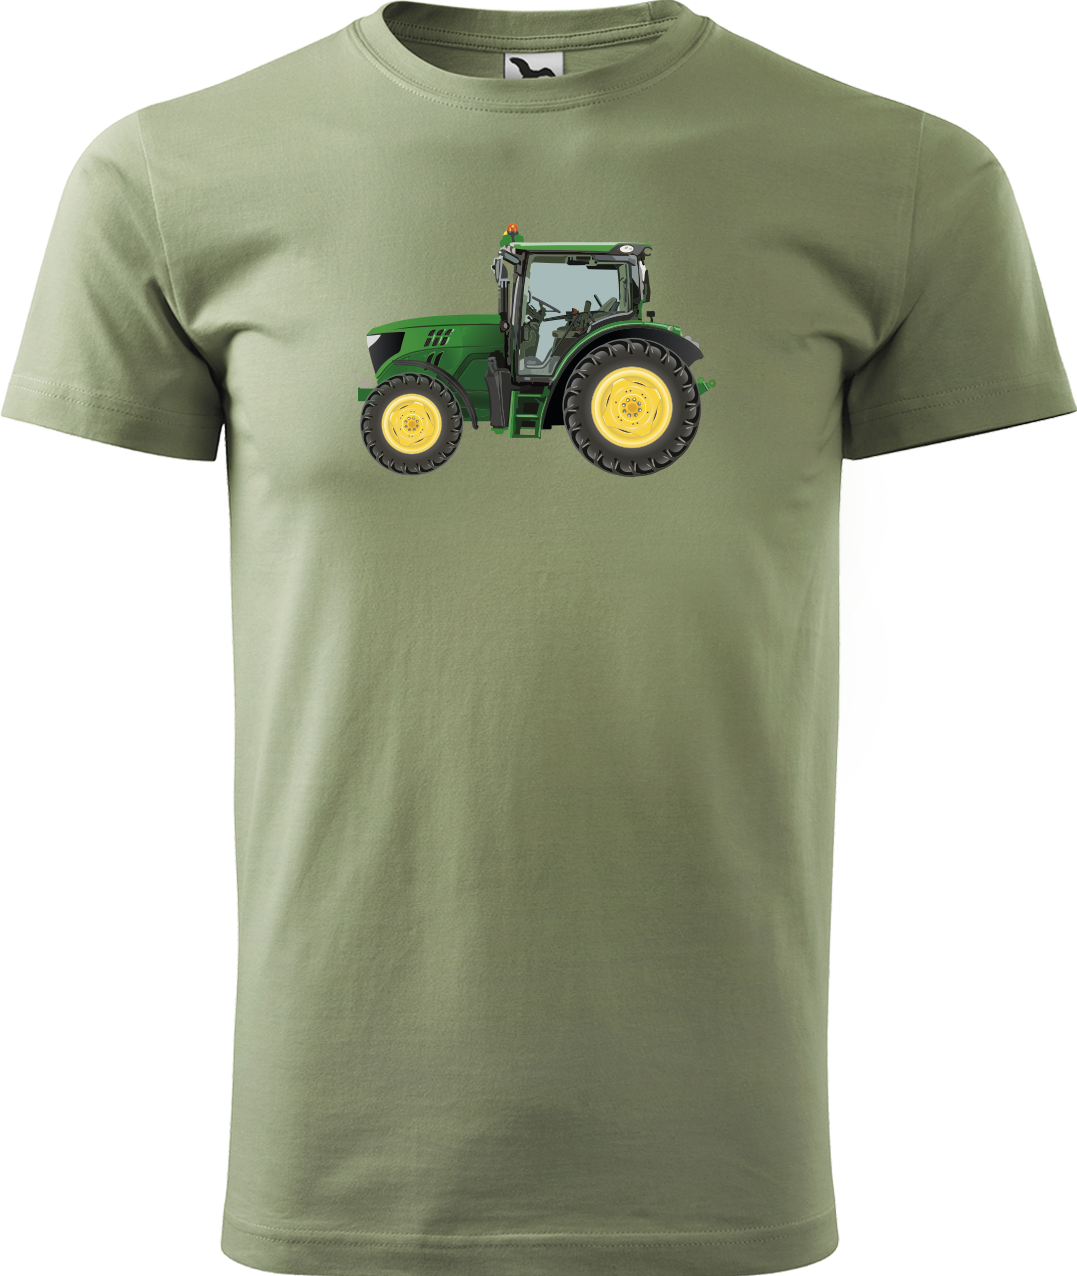 Tričko s traktorem - Zelený traktor Velikost: S, Barva: Světlá khaki (28)